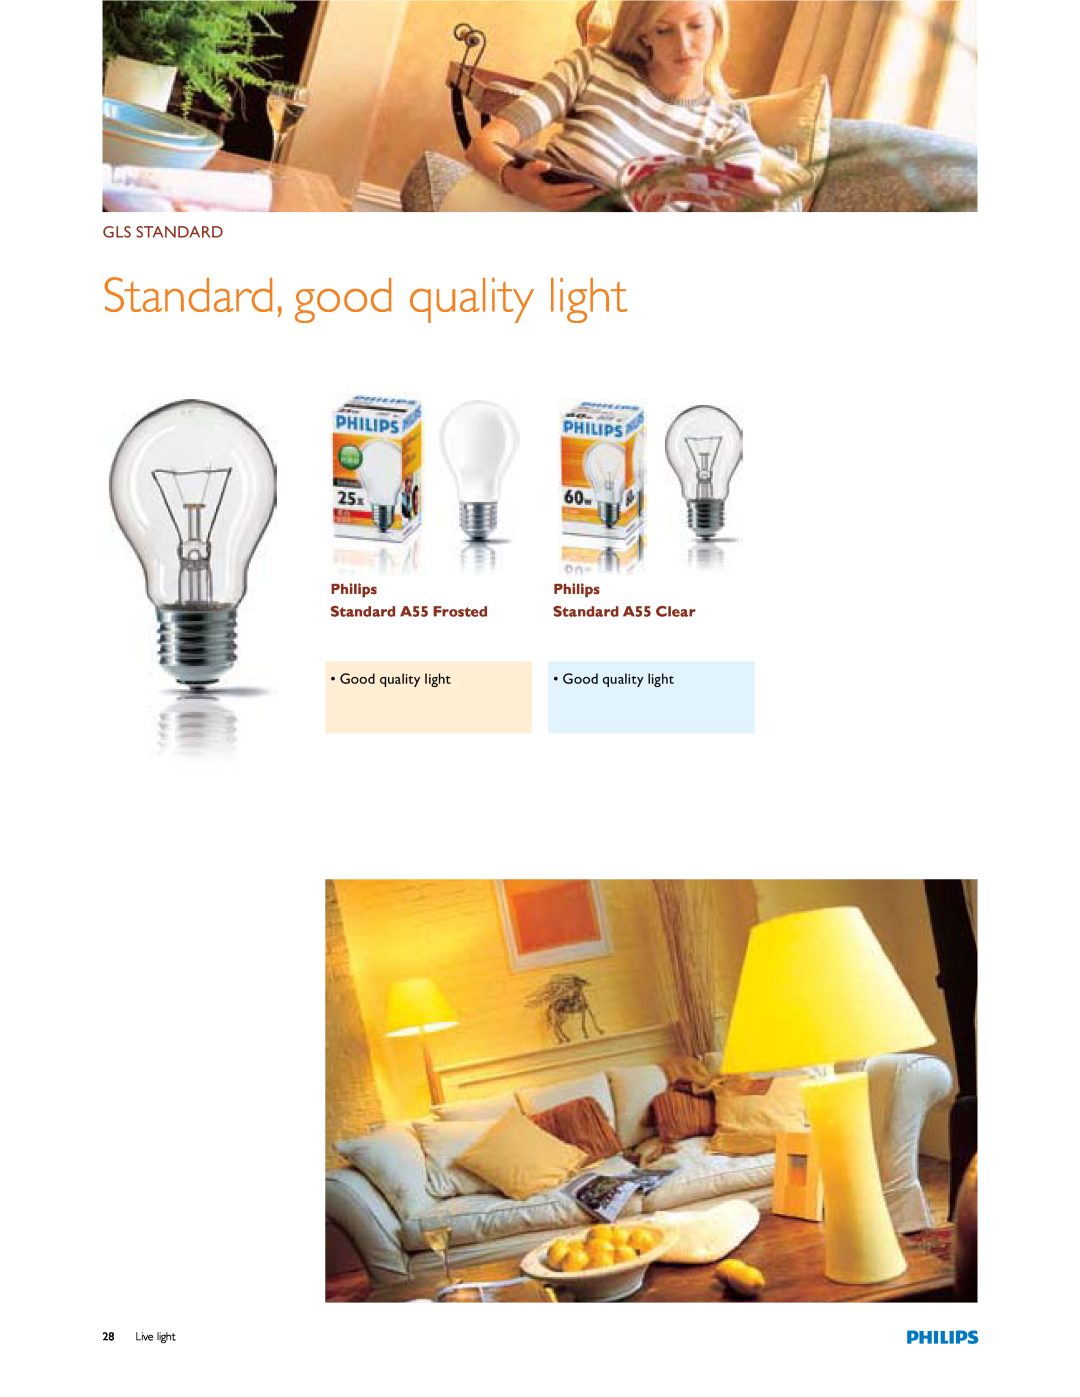 Philips manual Gls Standard, Standard, good quality light, Philips, Standard A55 Frosted, Standard A55 Clear 